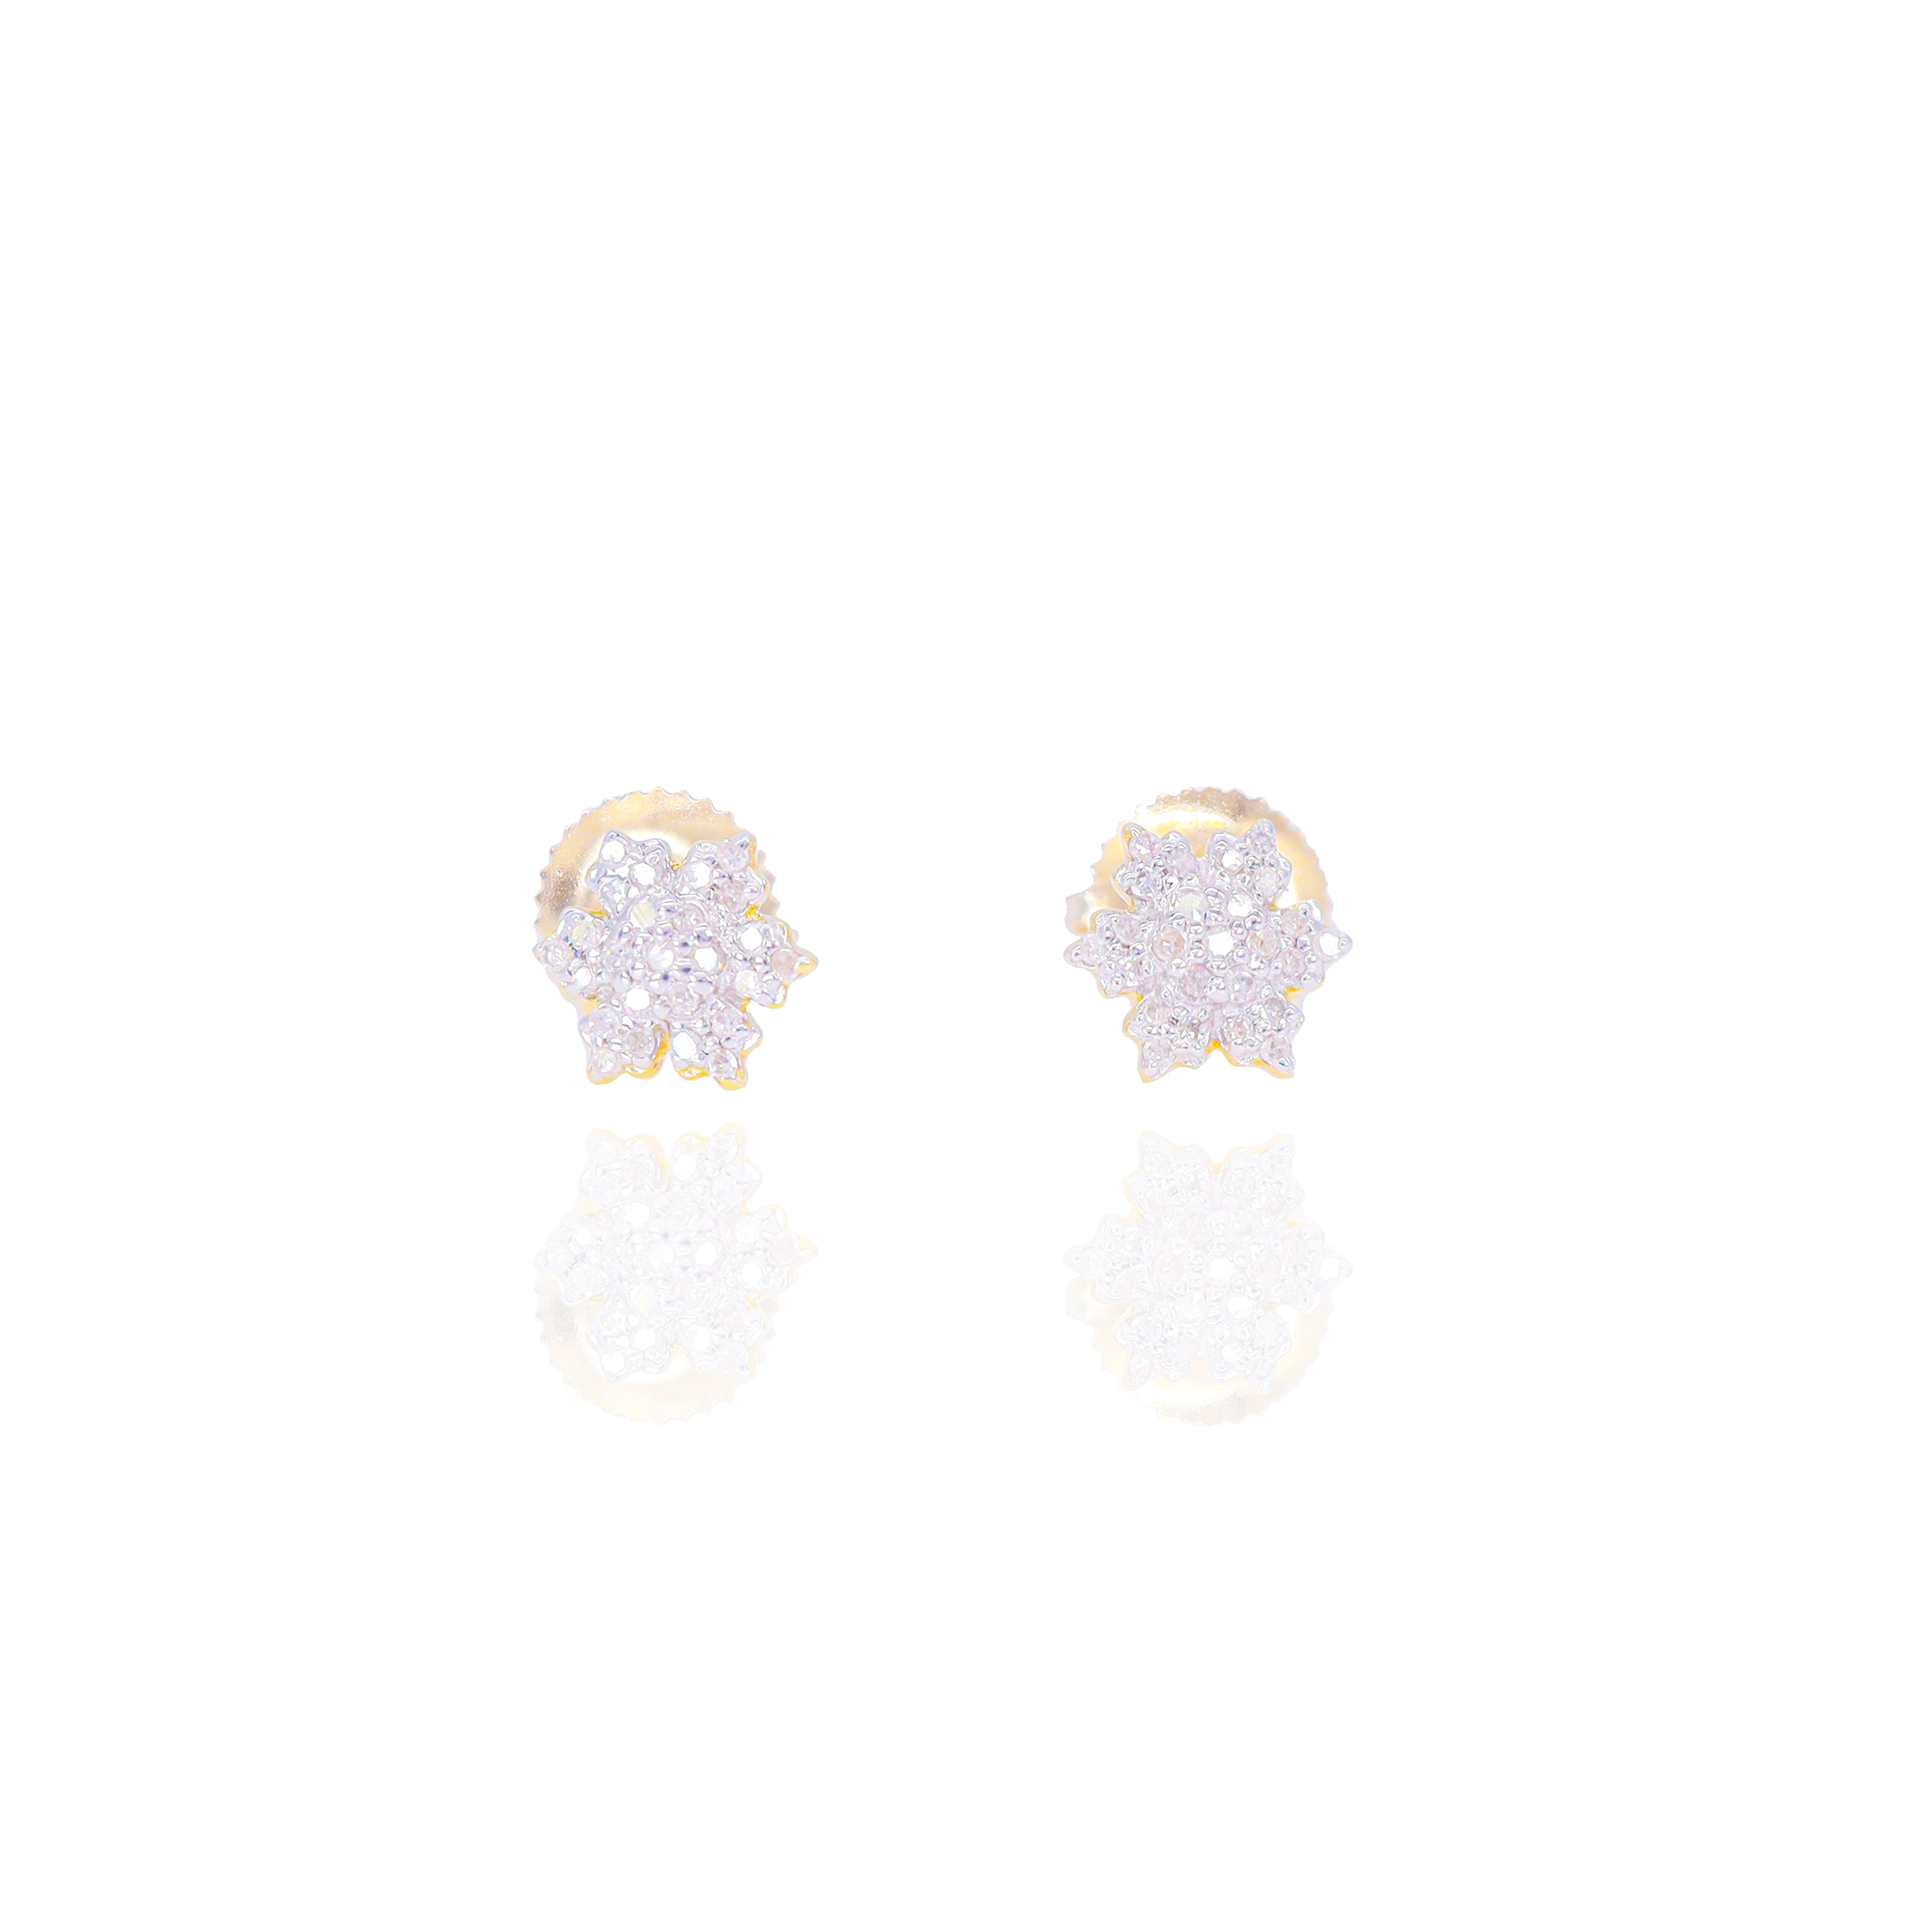 Diamond Snowflake Earrings